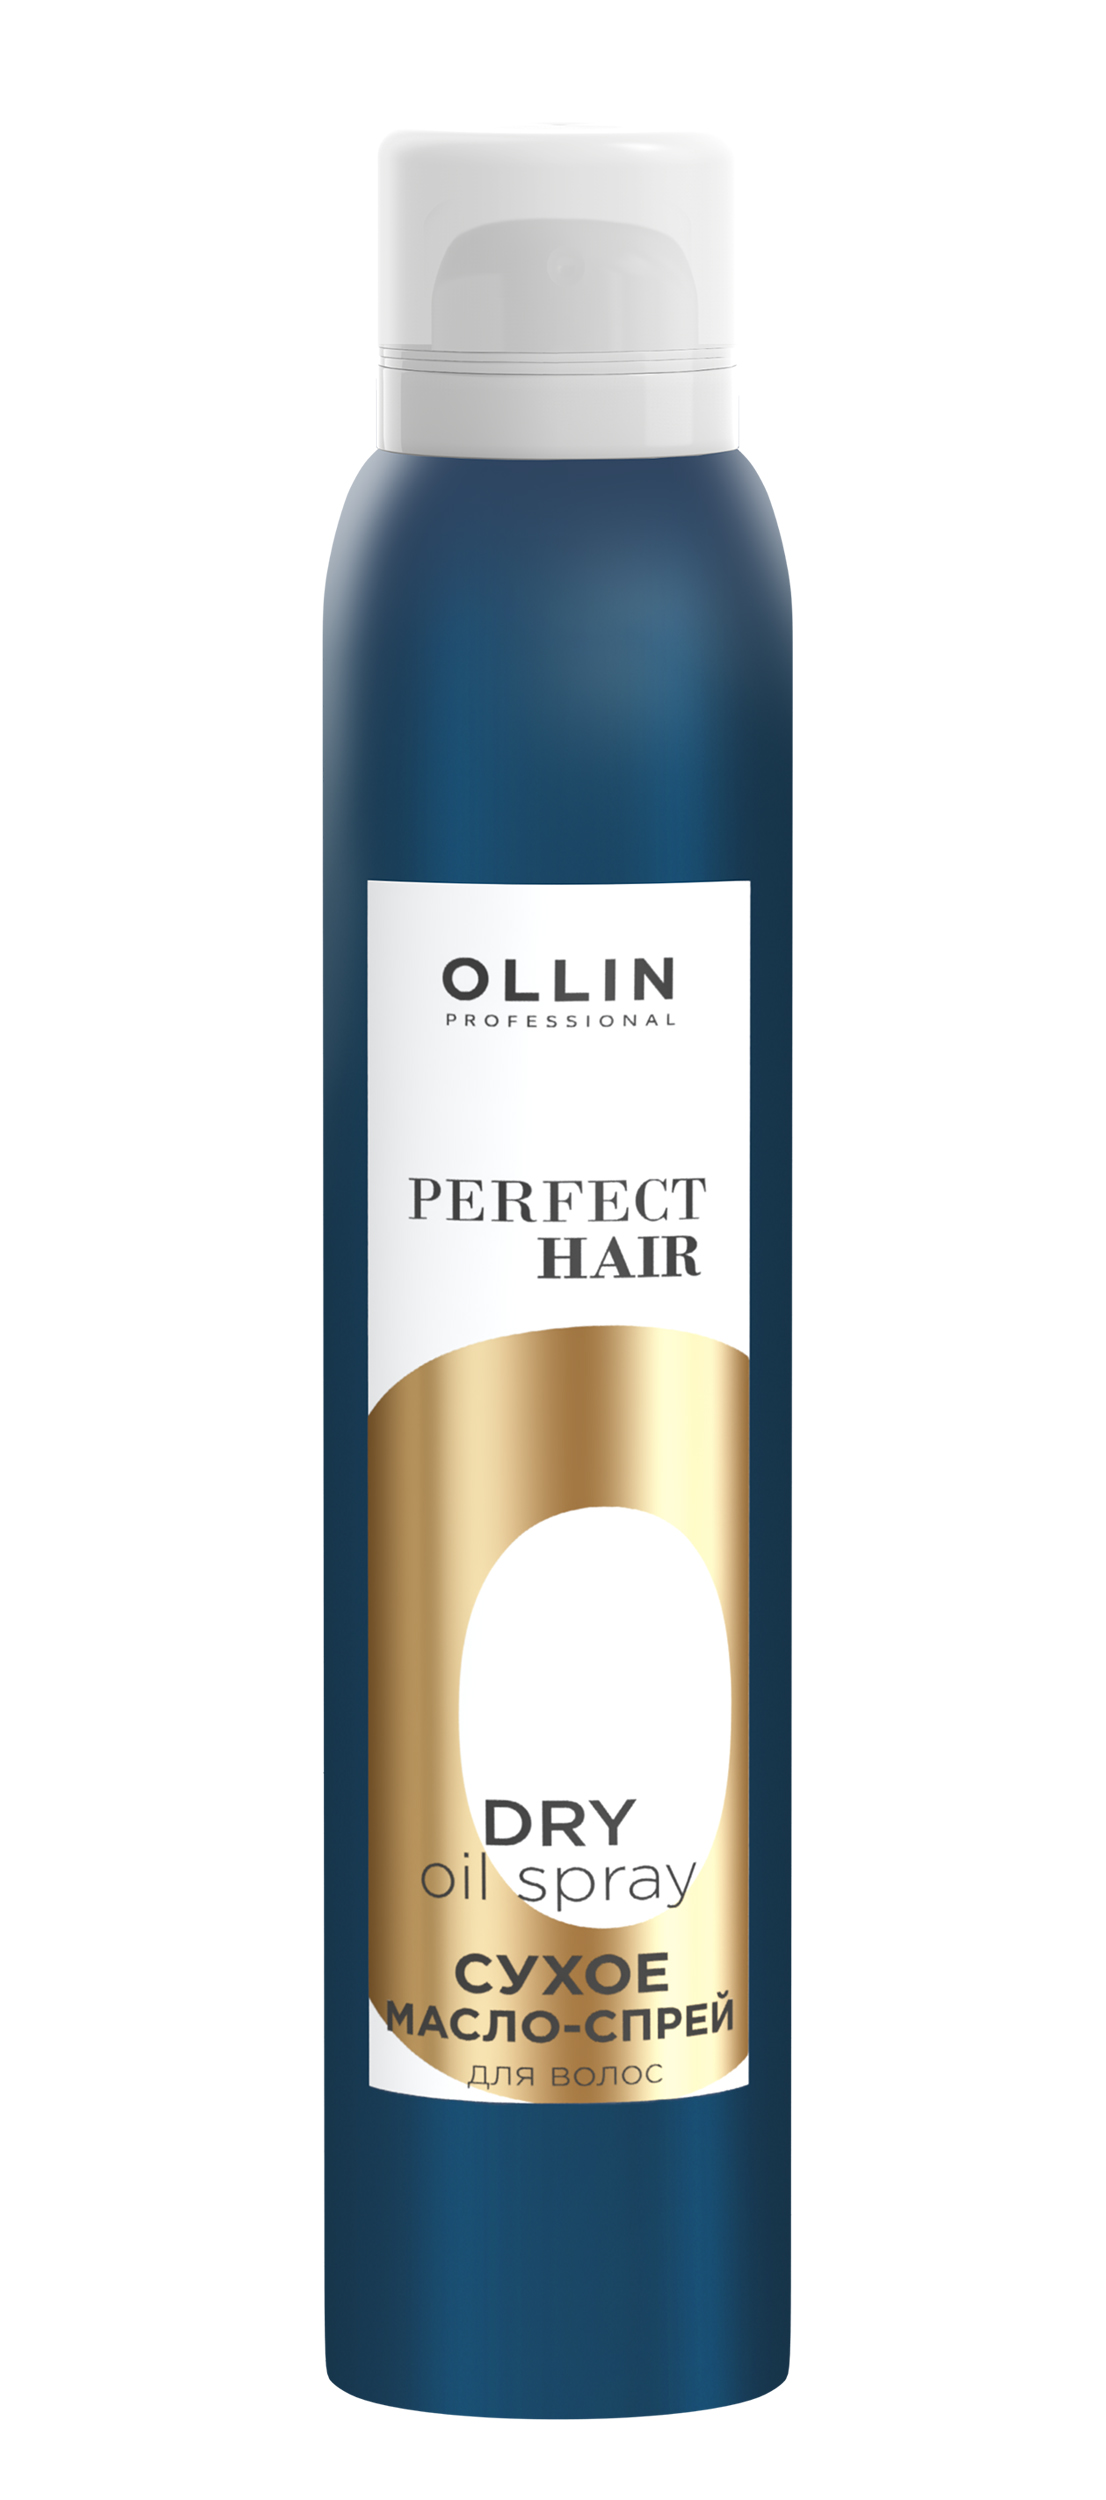 OLLIN PERFECT HAIR Сухое масло-спрей для волос 200мл 